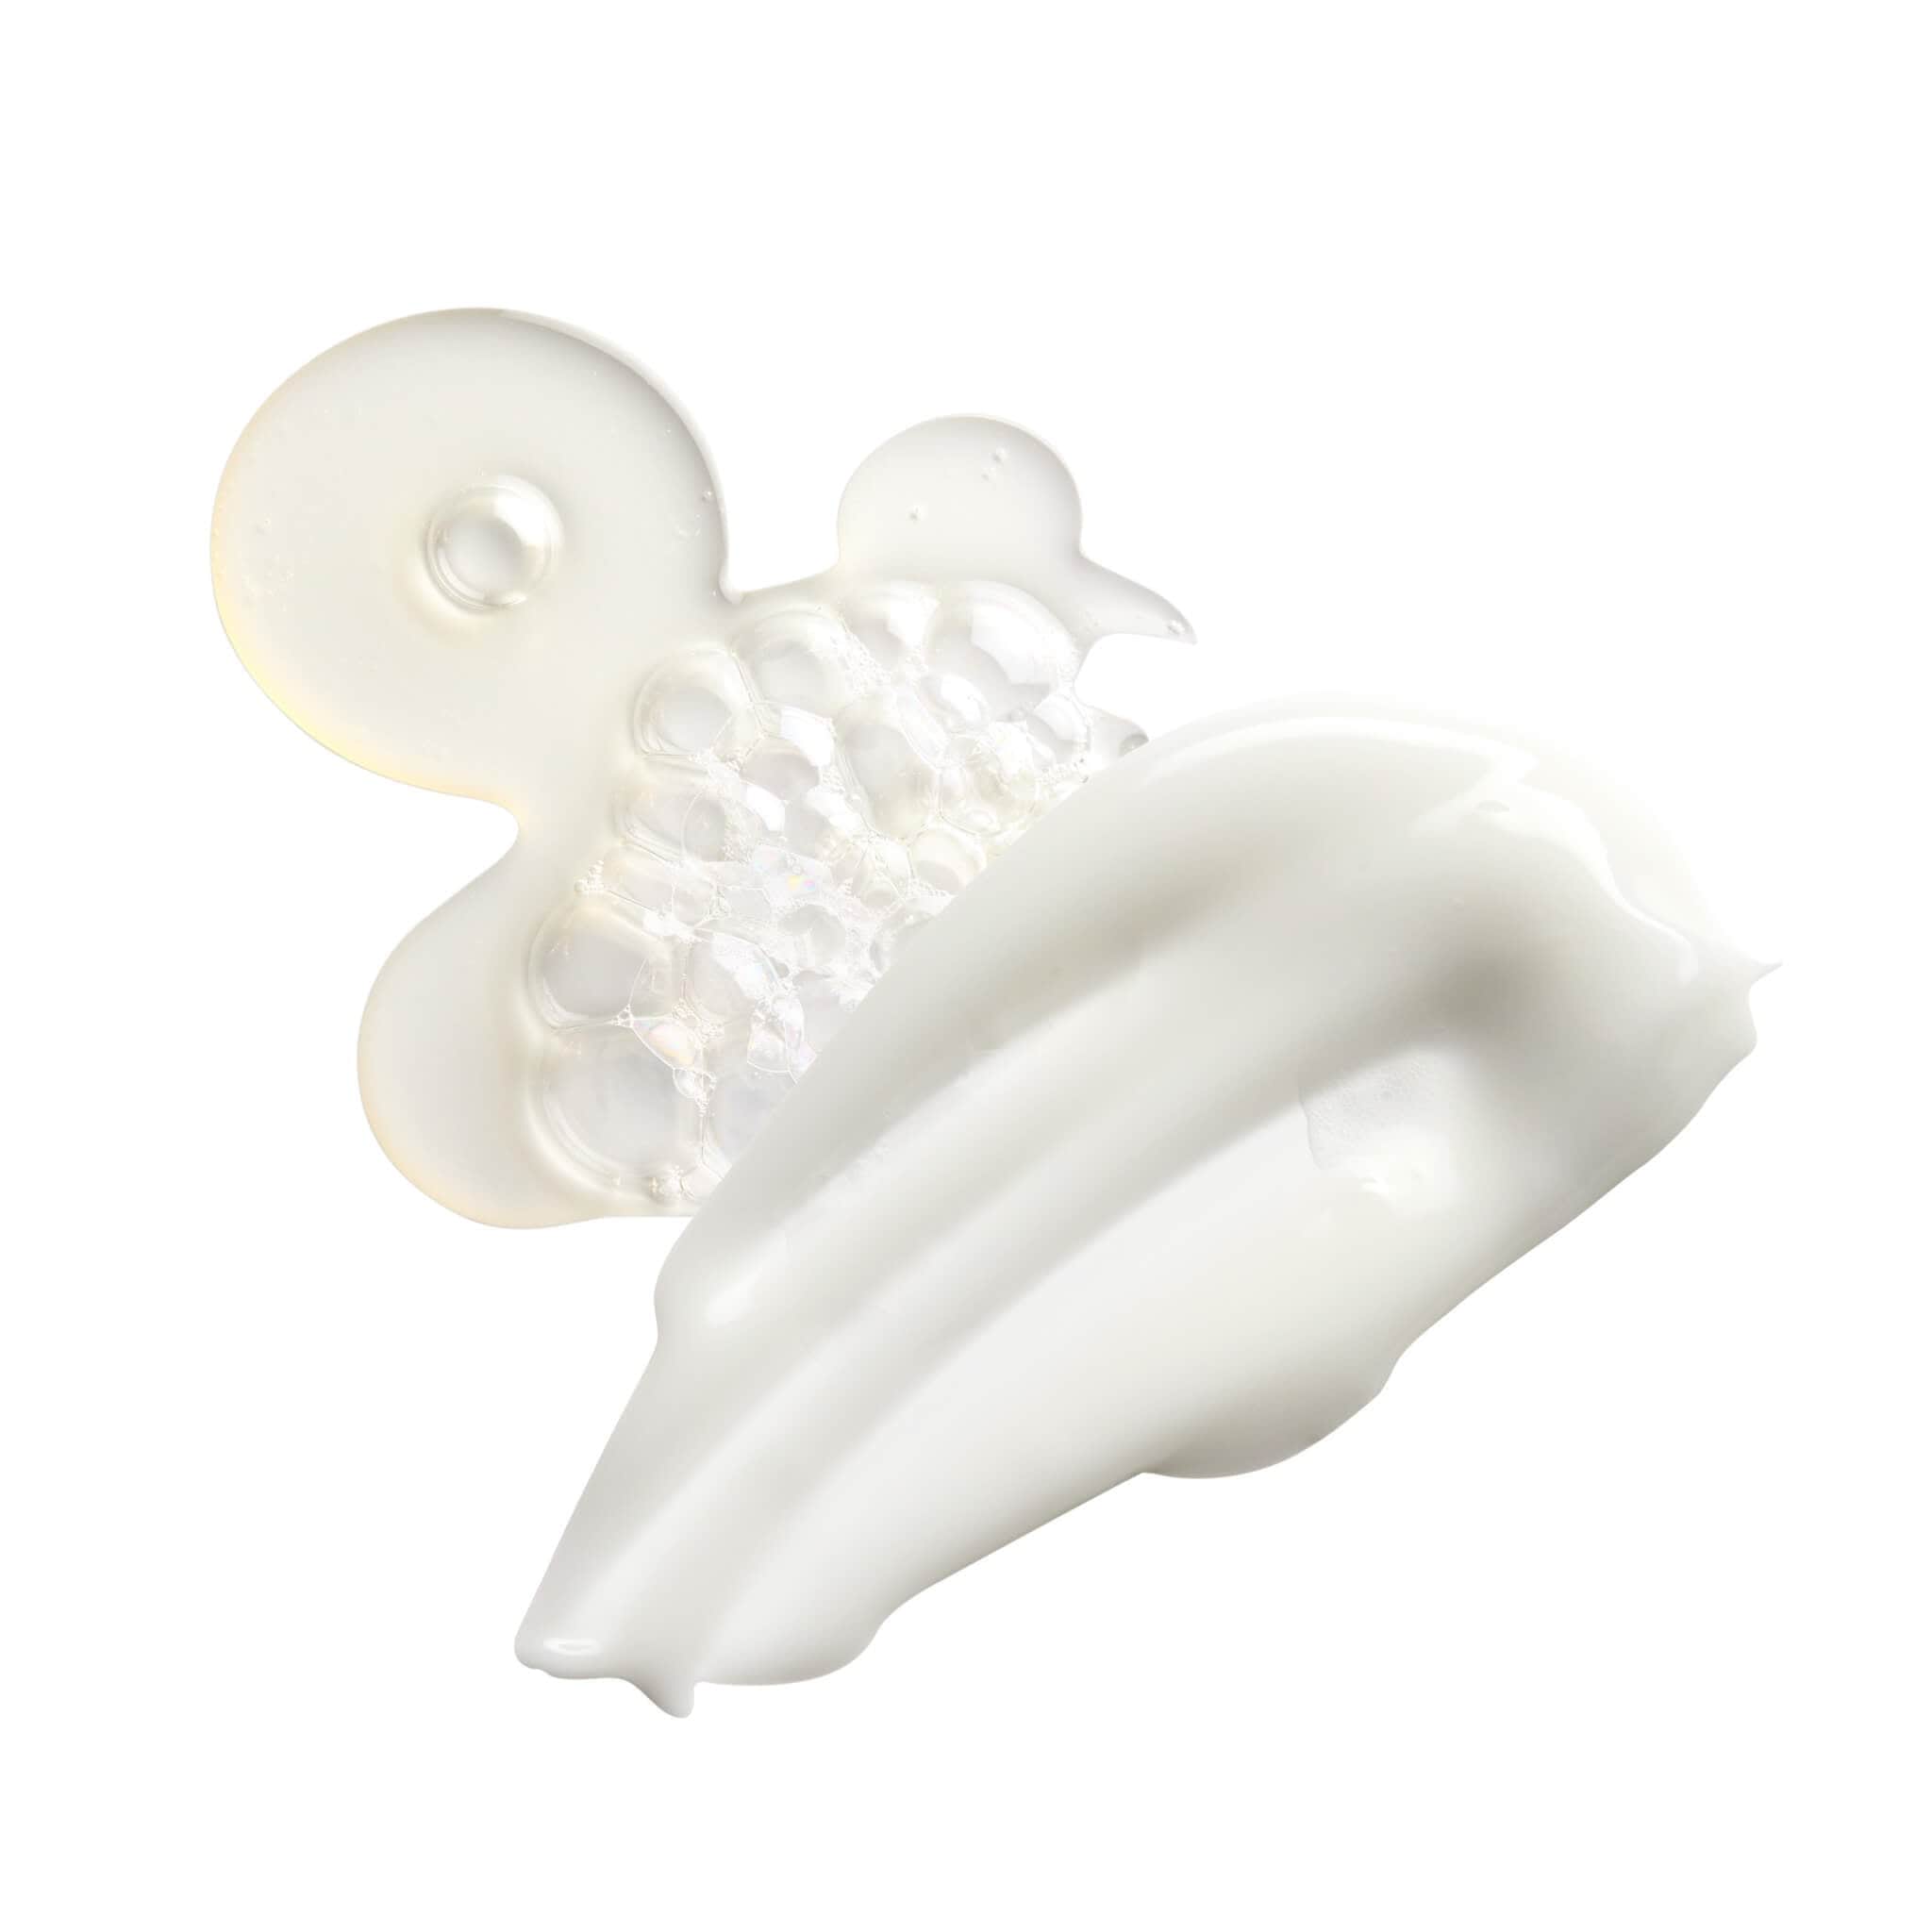 Baby Shampoo Bubbly Texture, Baby Lotion White Texture